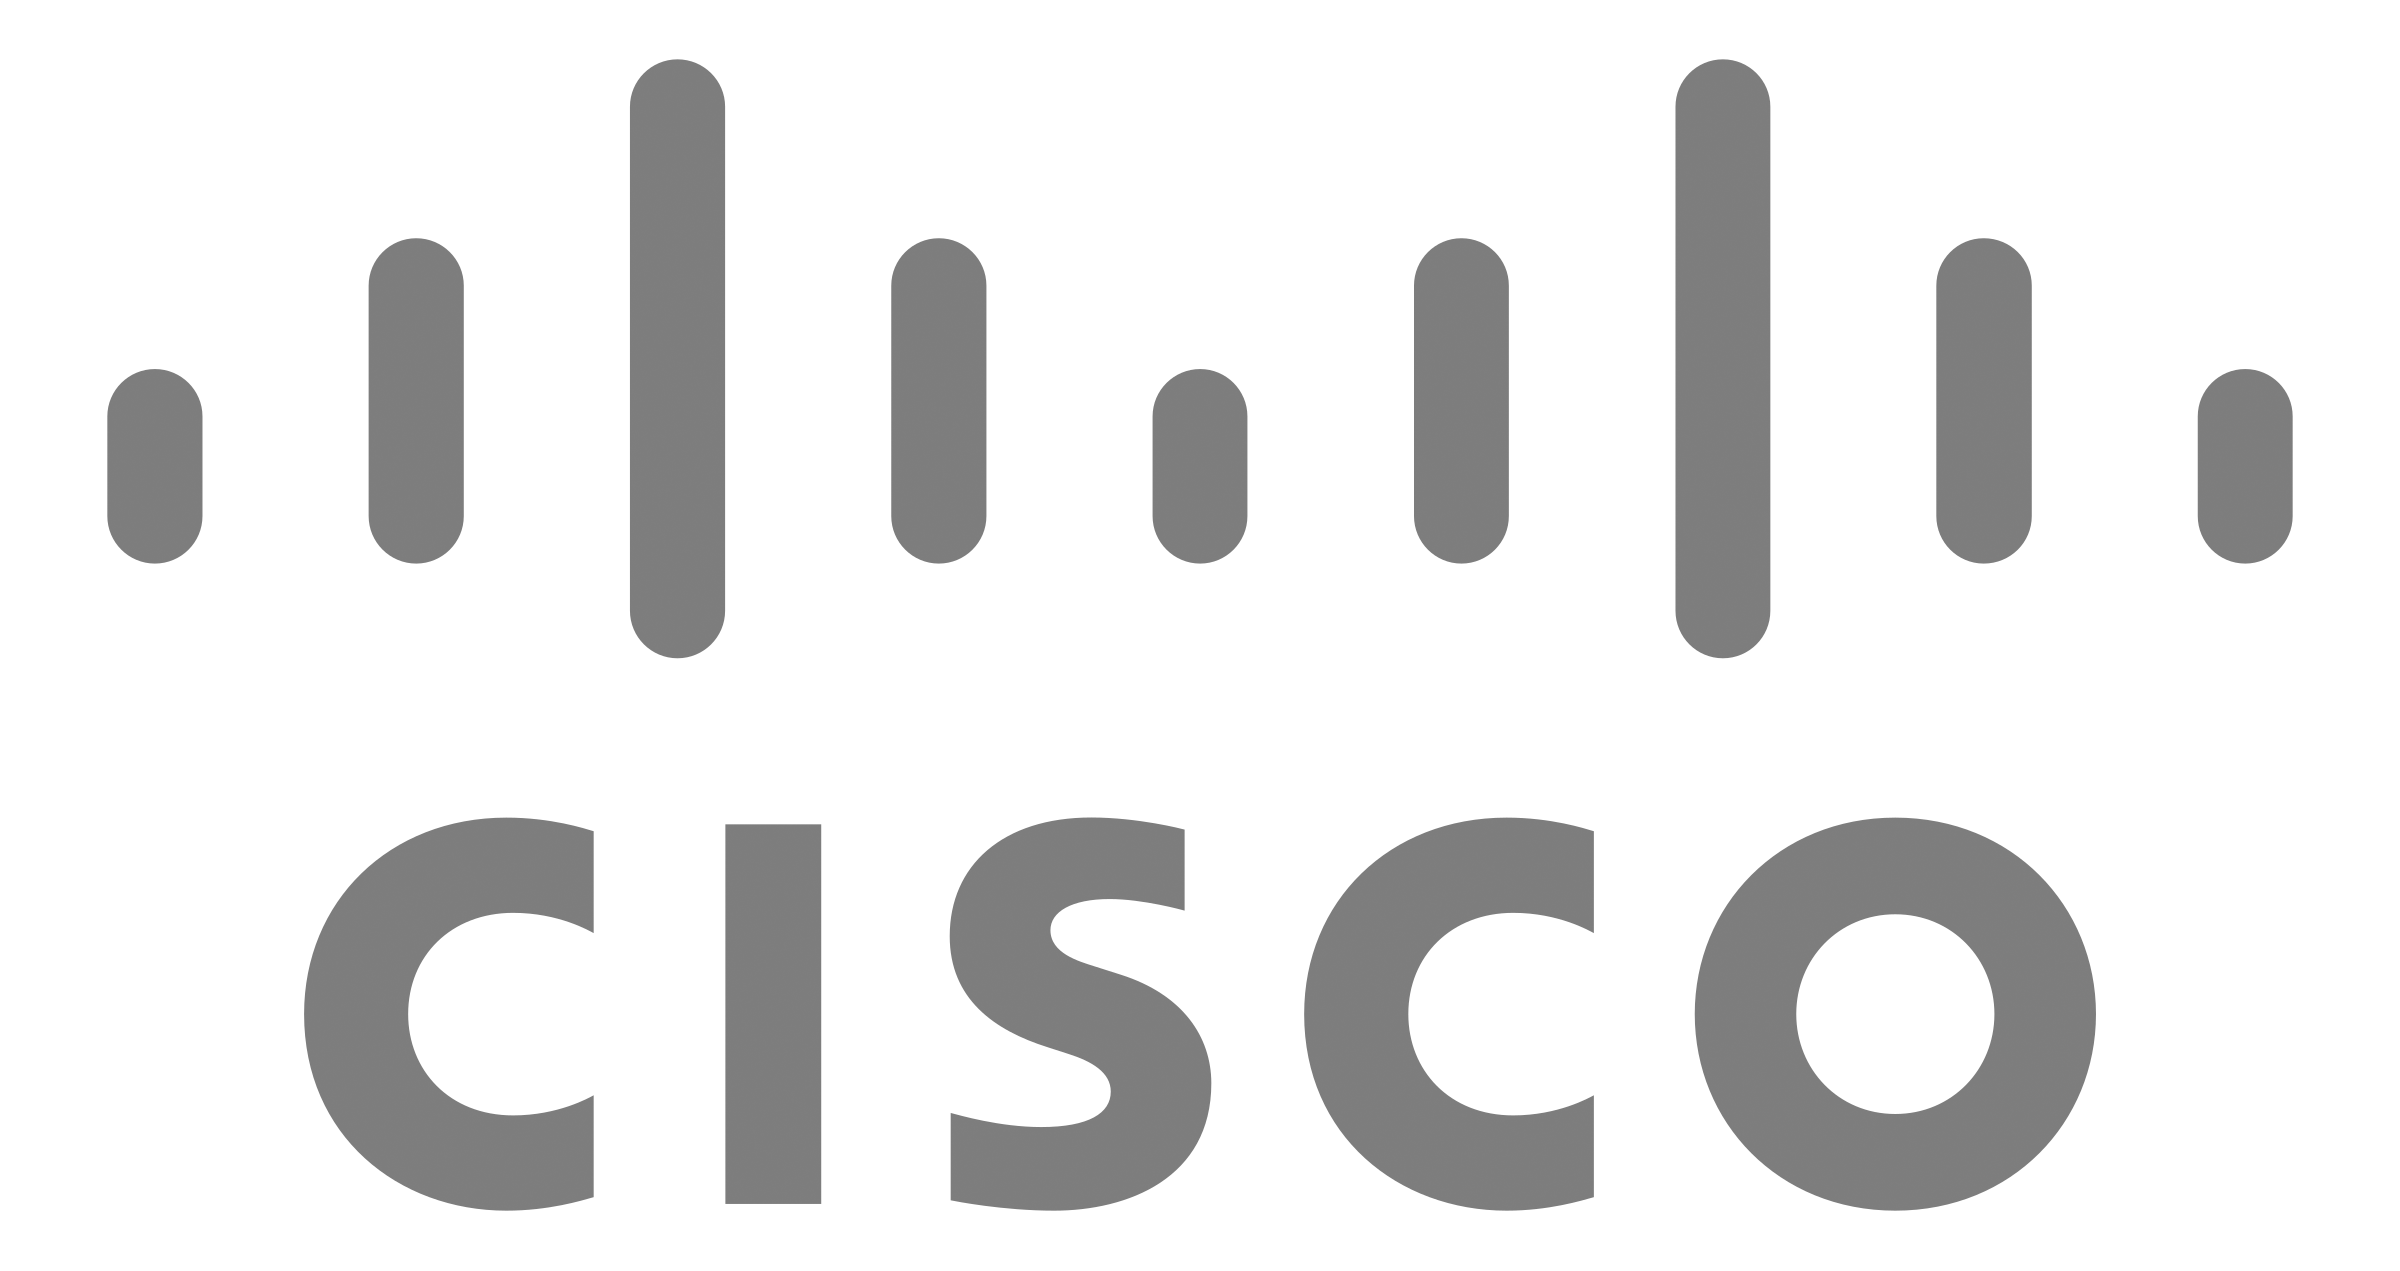 Cisco Bw Logo